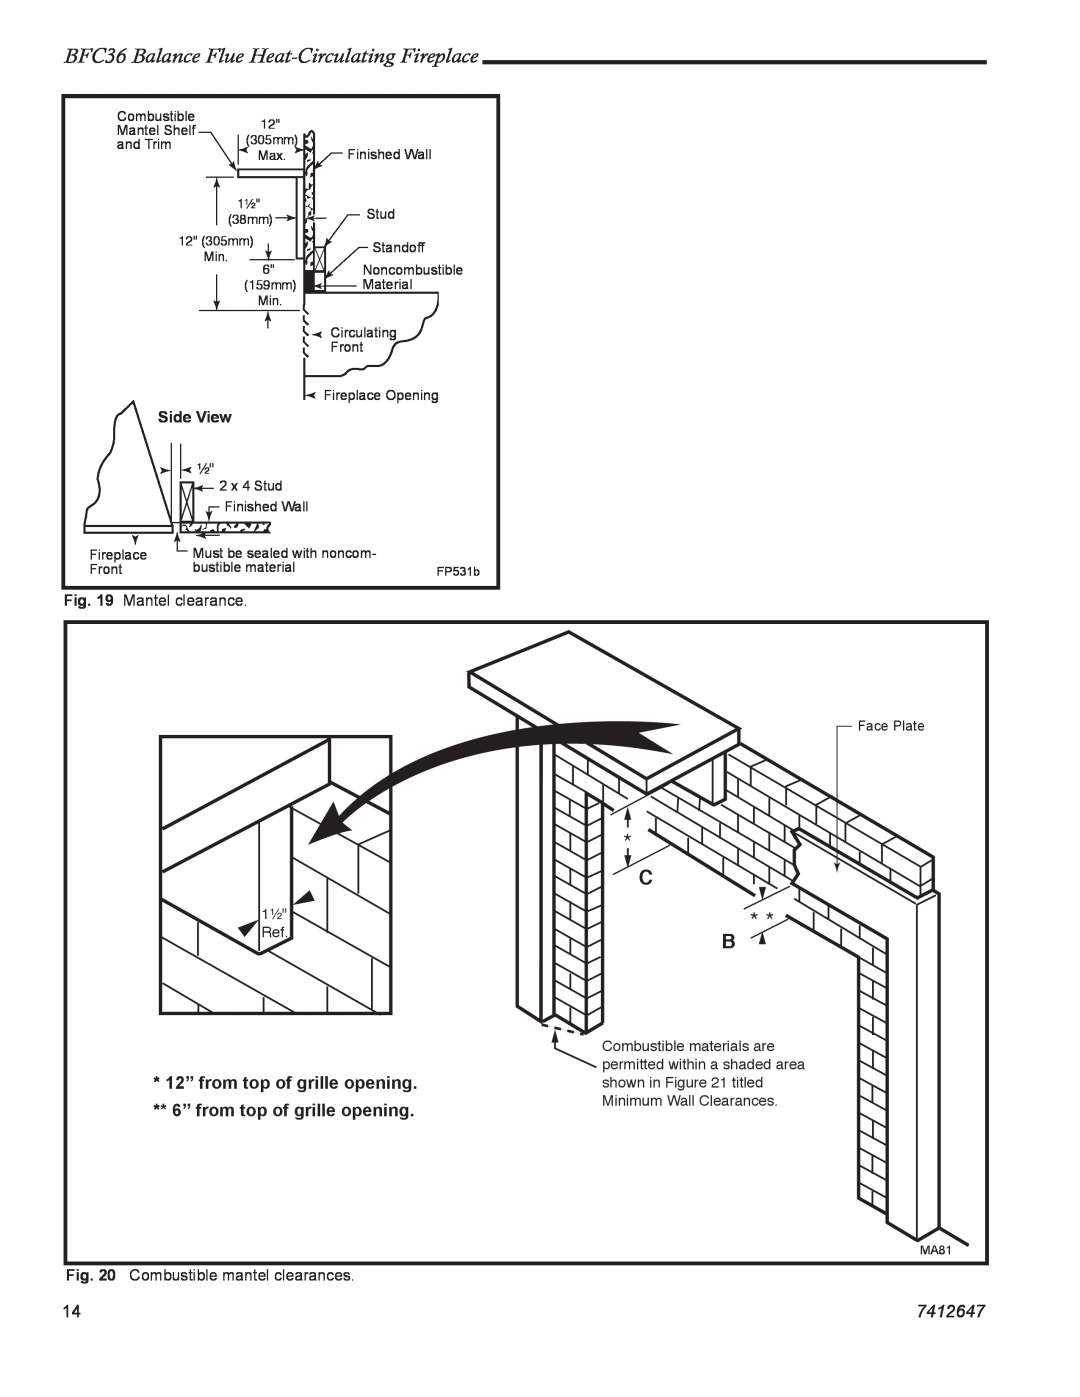 Vermont Casting manual BFC36 Balance Flue Heat-CirculatingFireplace, 7412647, Side View 